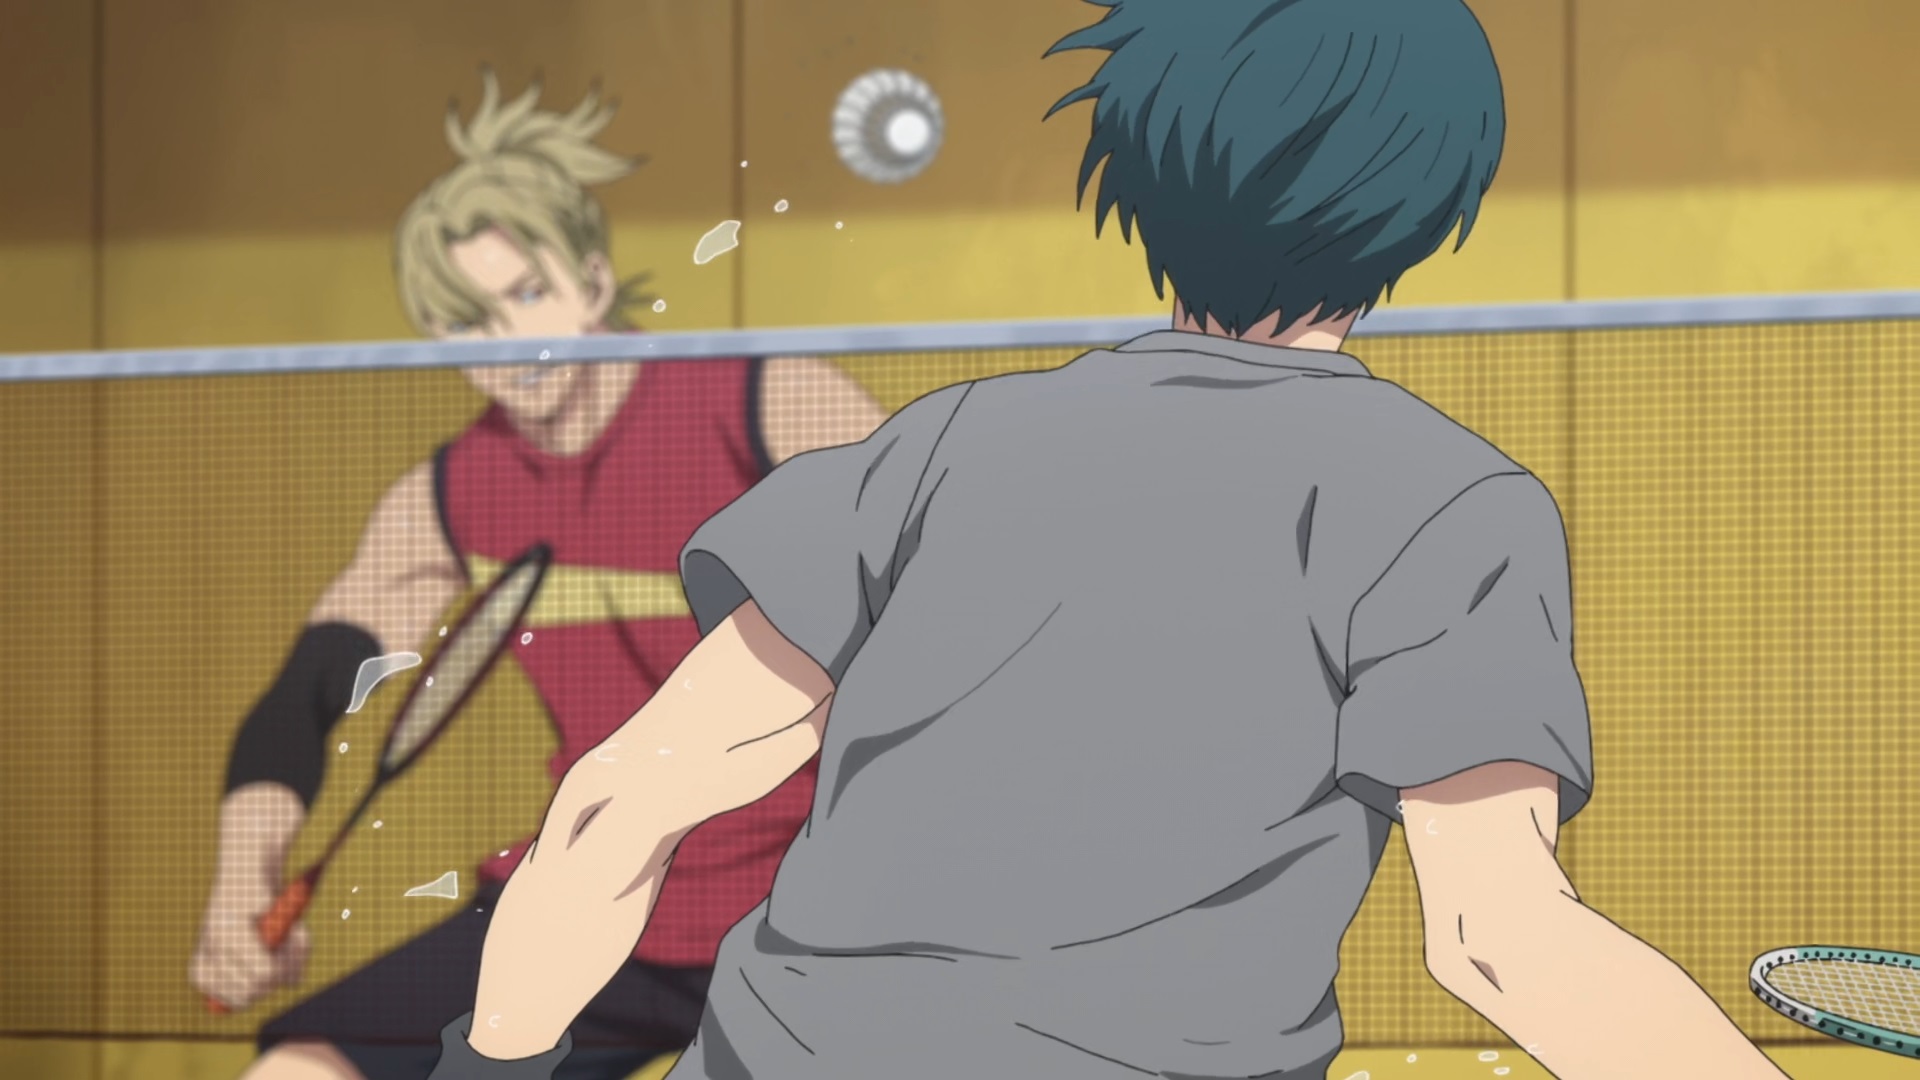 Mikoto playing a badminton match